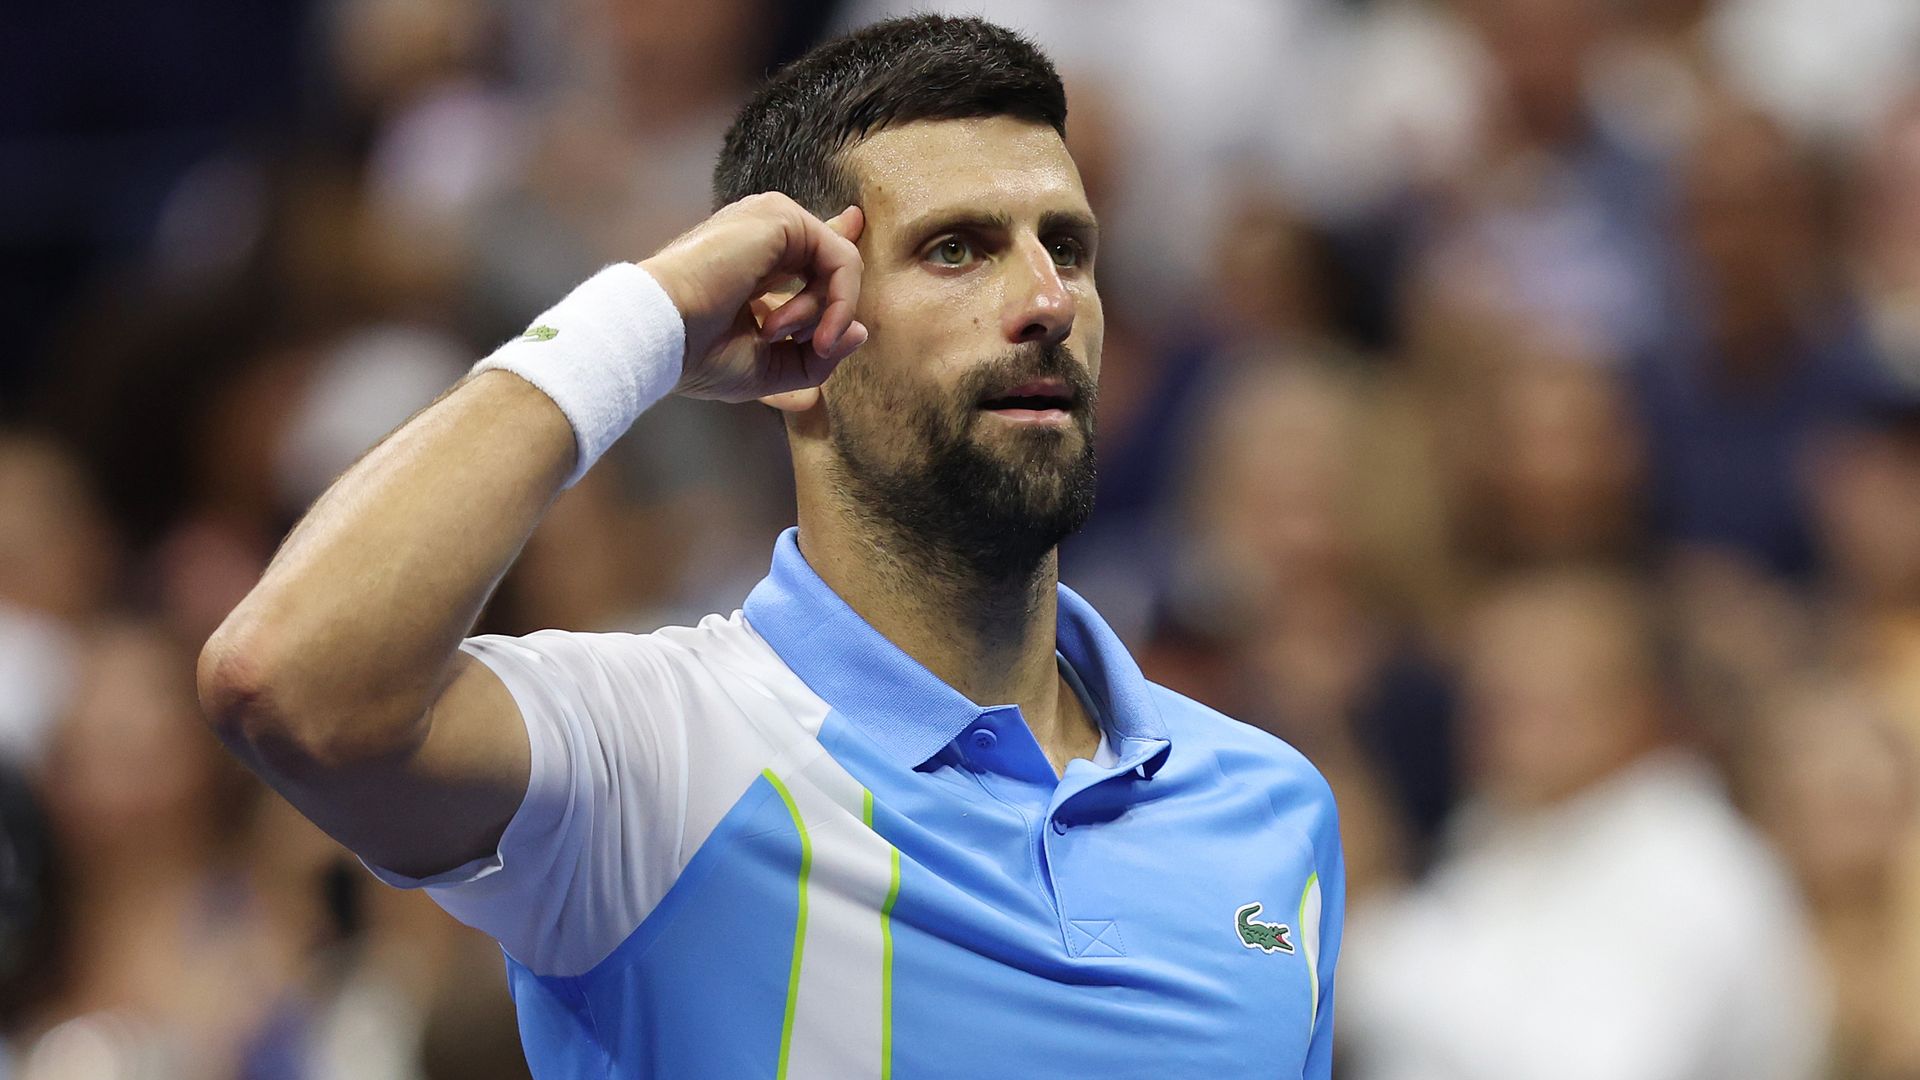 Djokovic shuts out Shelton to reach his 10th US Open final